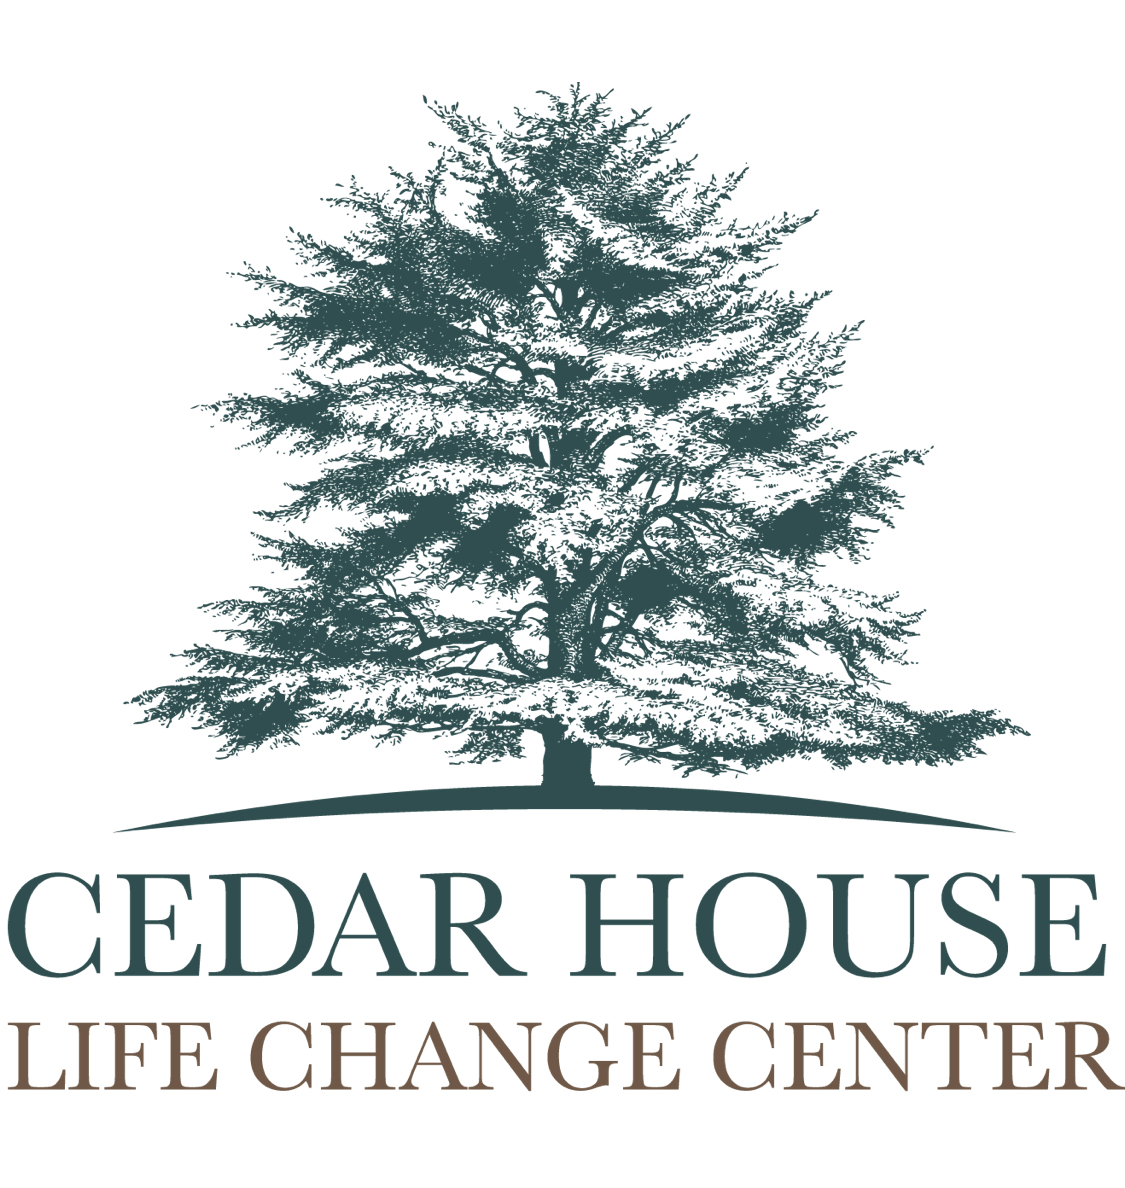 Cedar House Life Change Center Company Logo